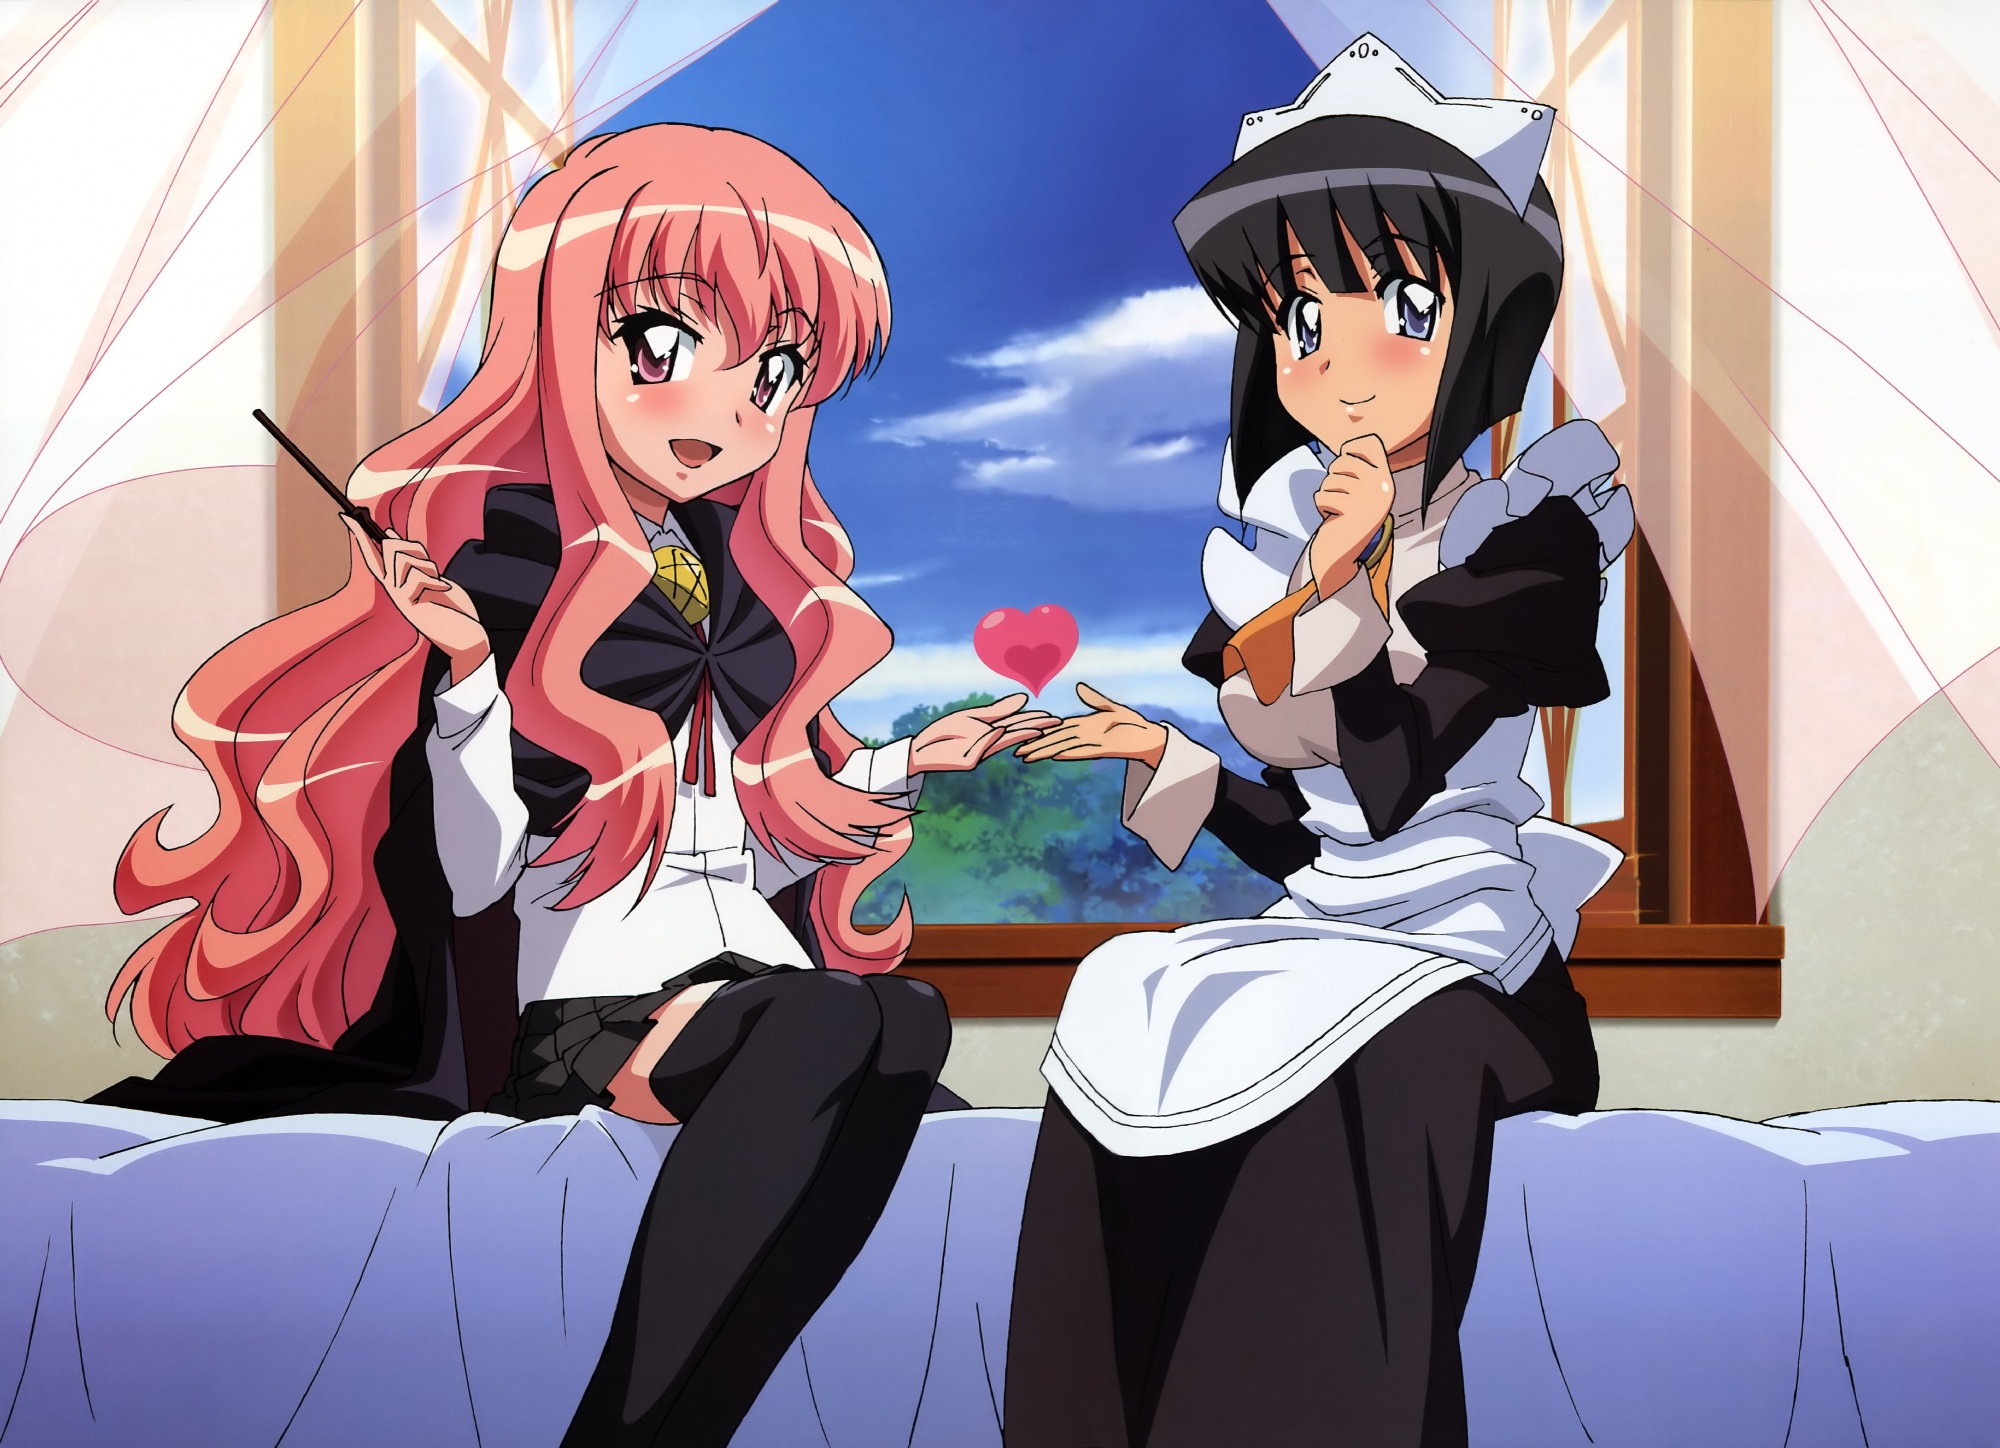 Louise and Siesta from Zero no Tsukaima, a popular anime series.